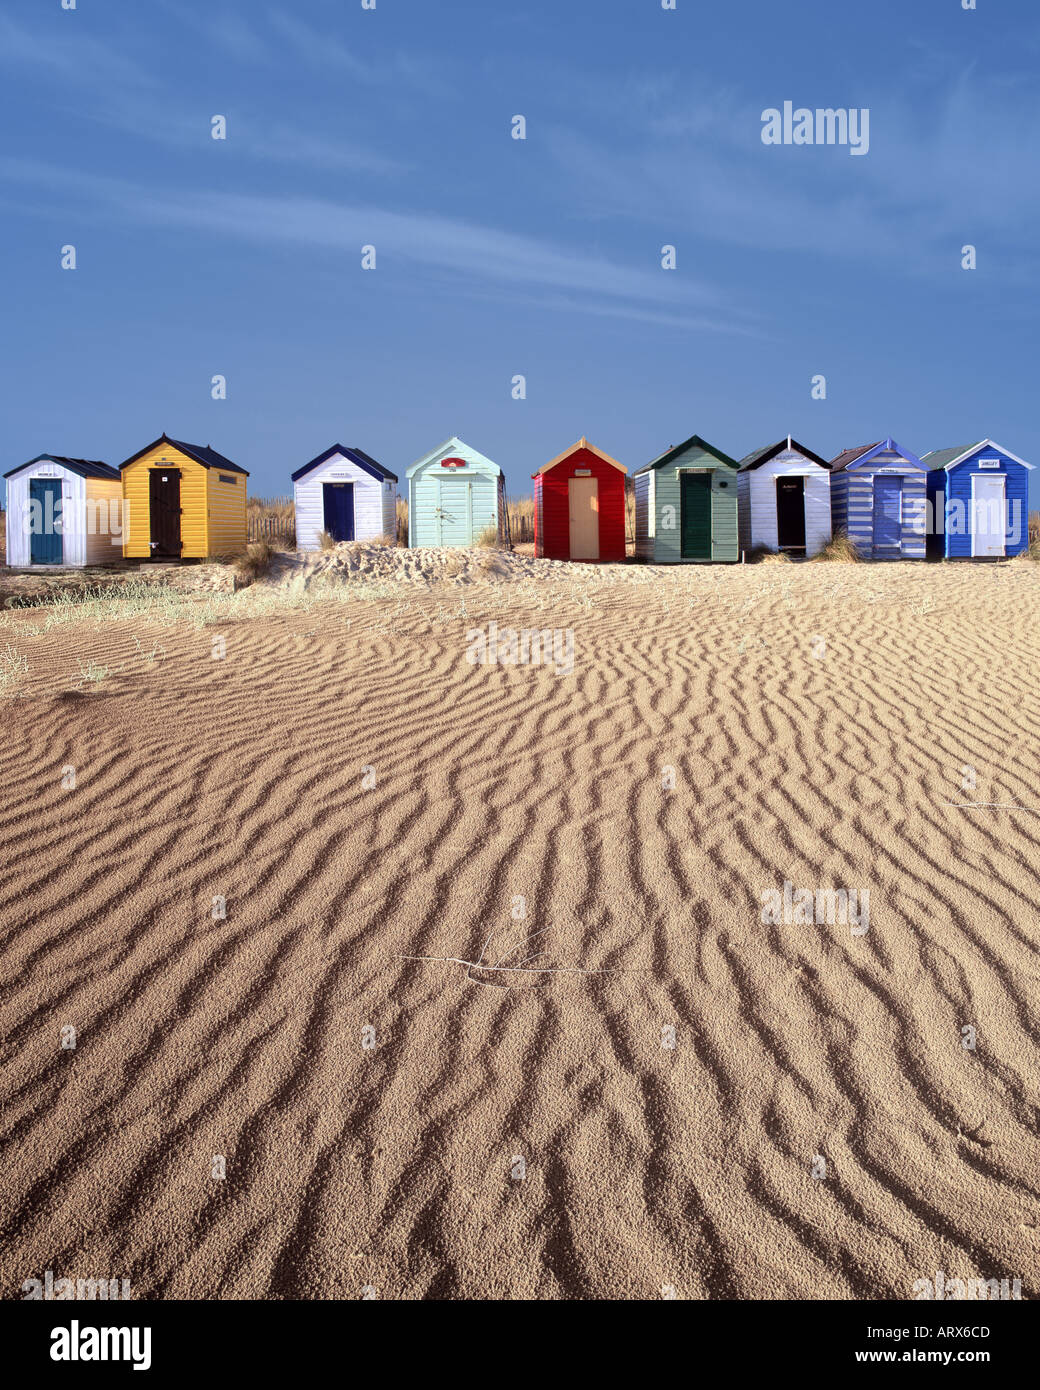 GB - SUFFOLK: Beach huts at Southwold Stock Photo